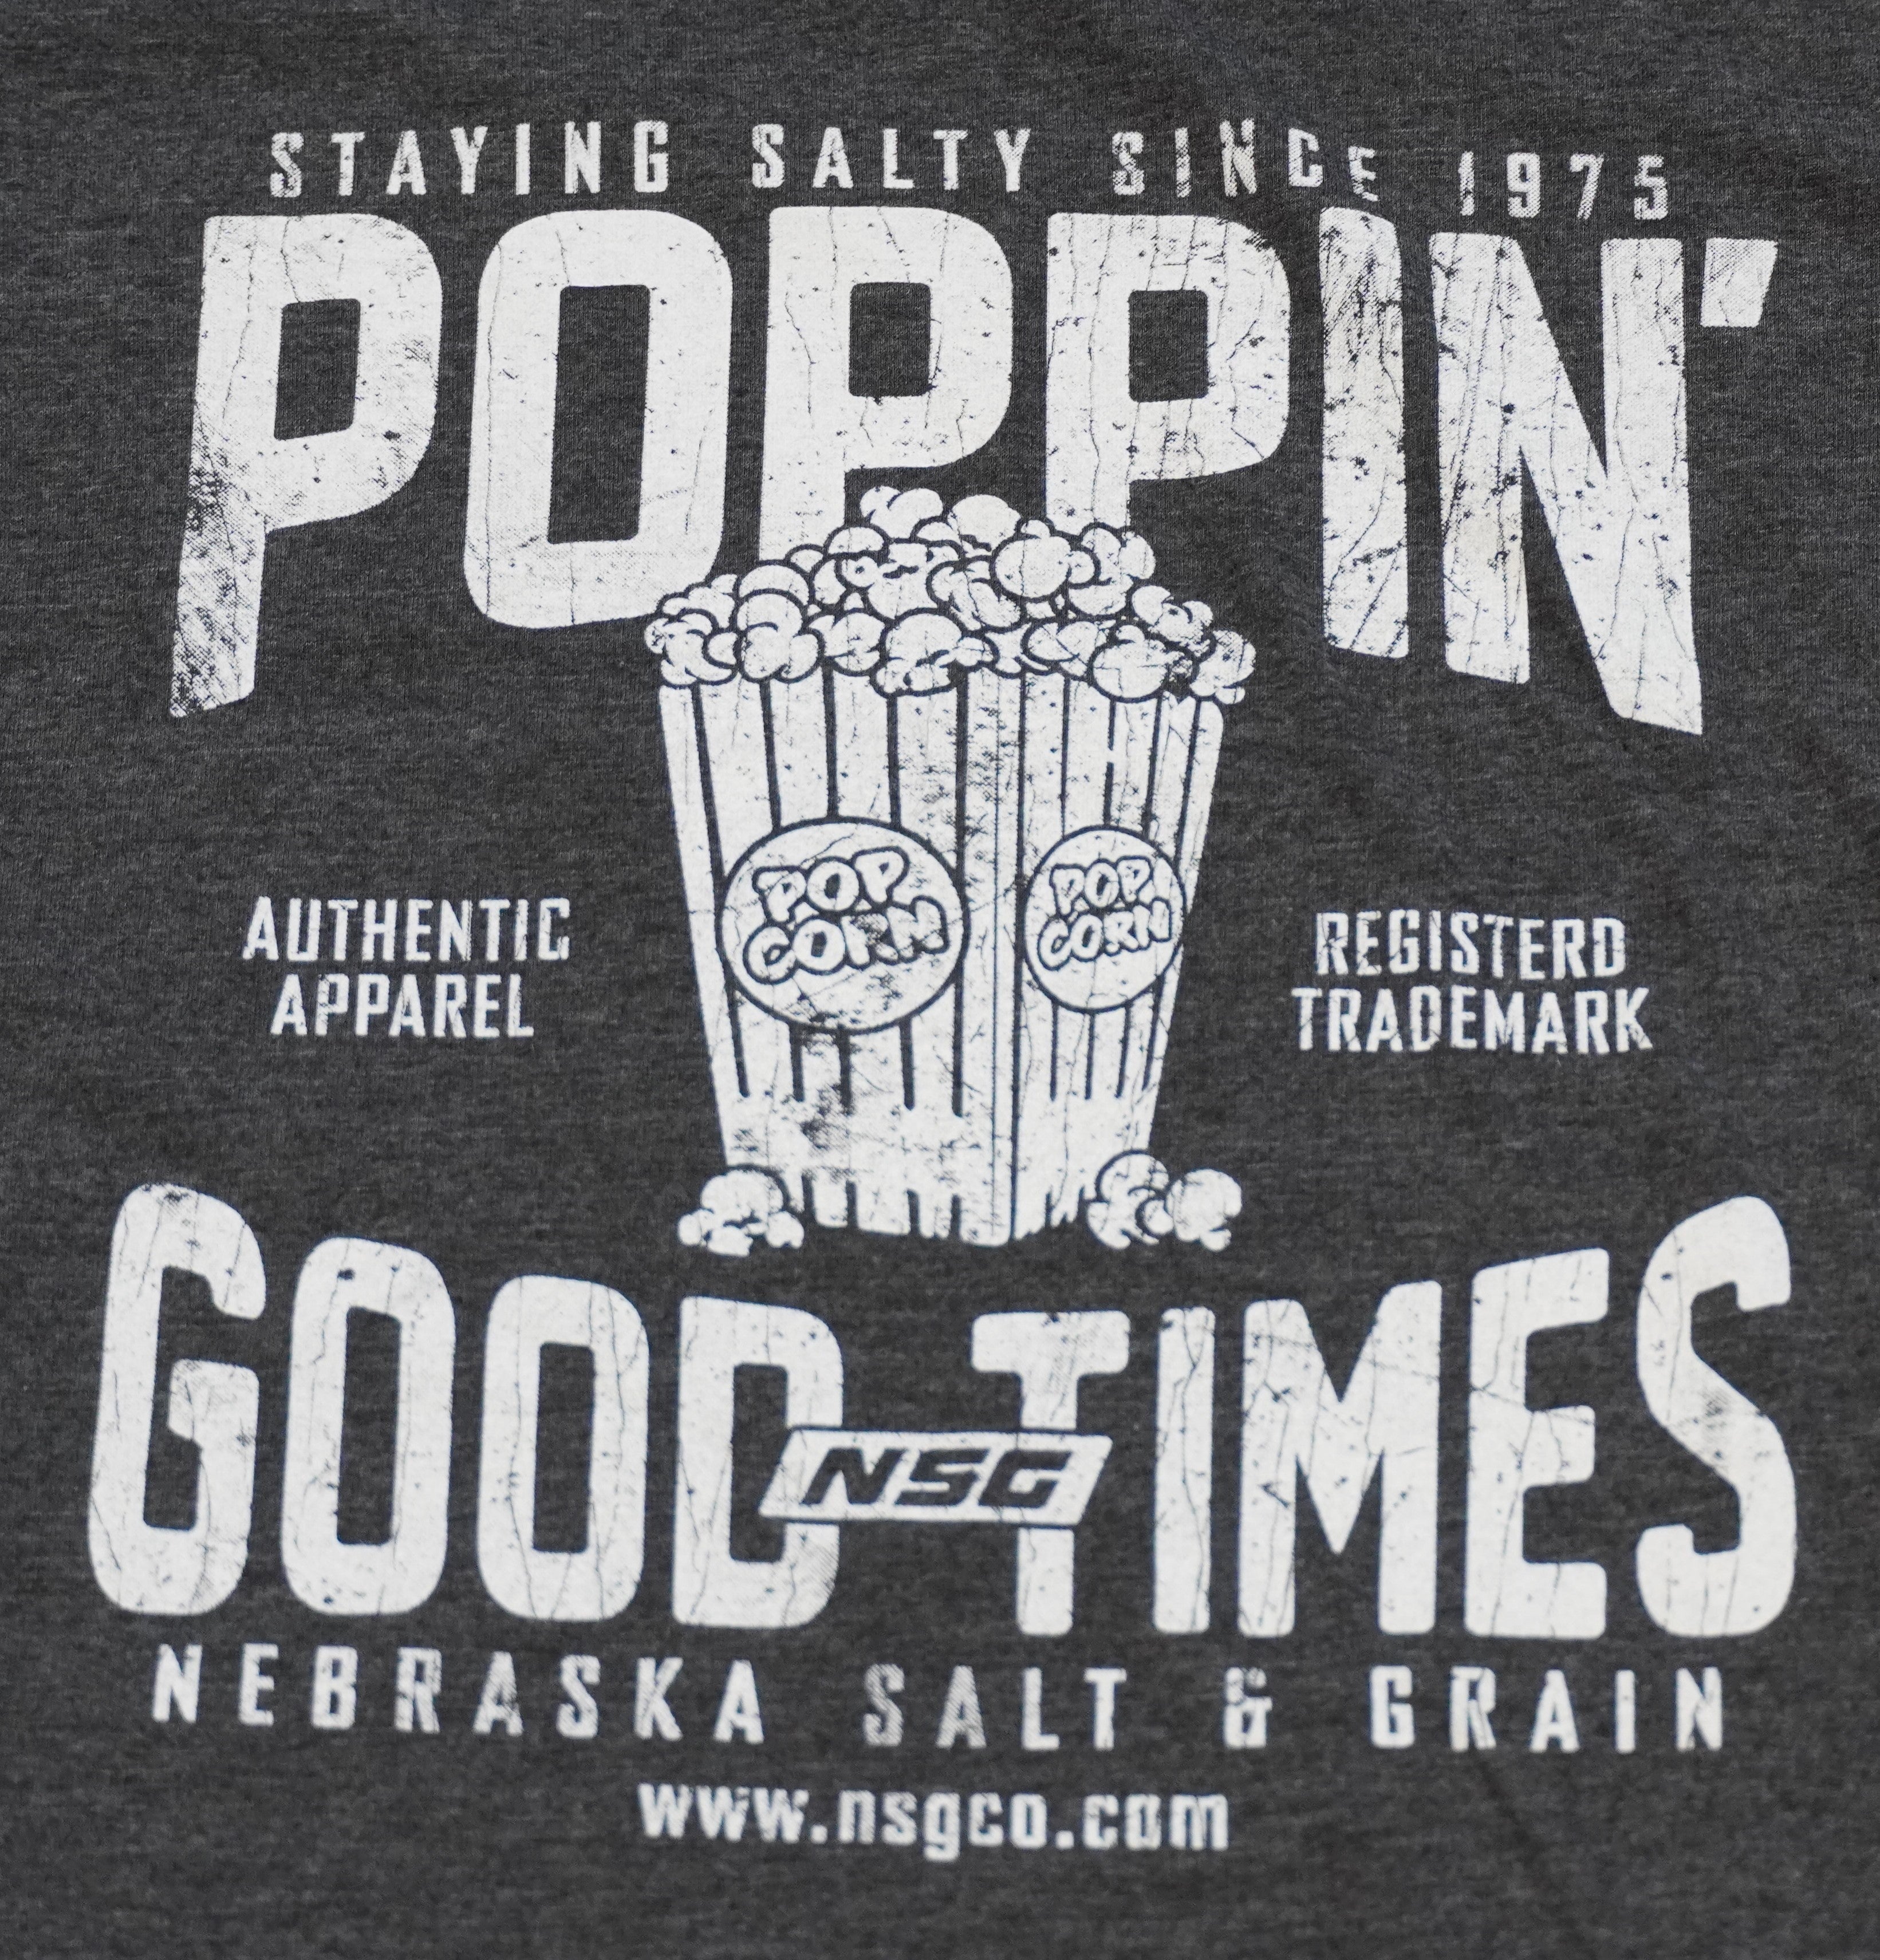 Poppin Good Times T-Shirt